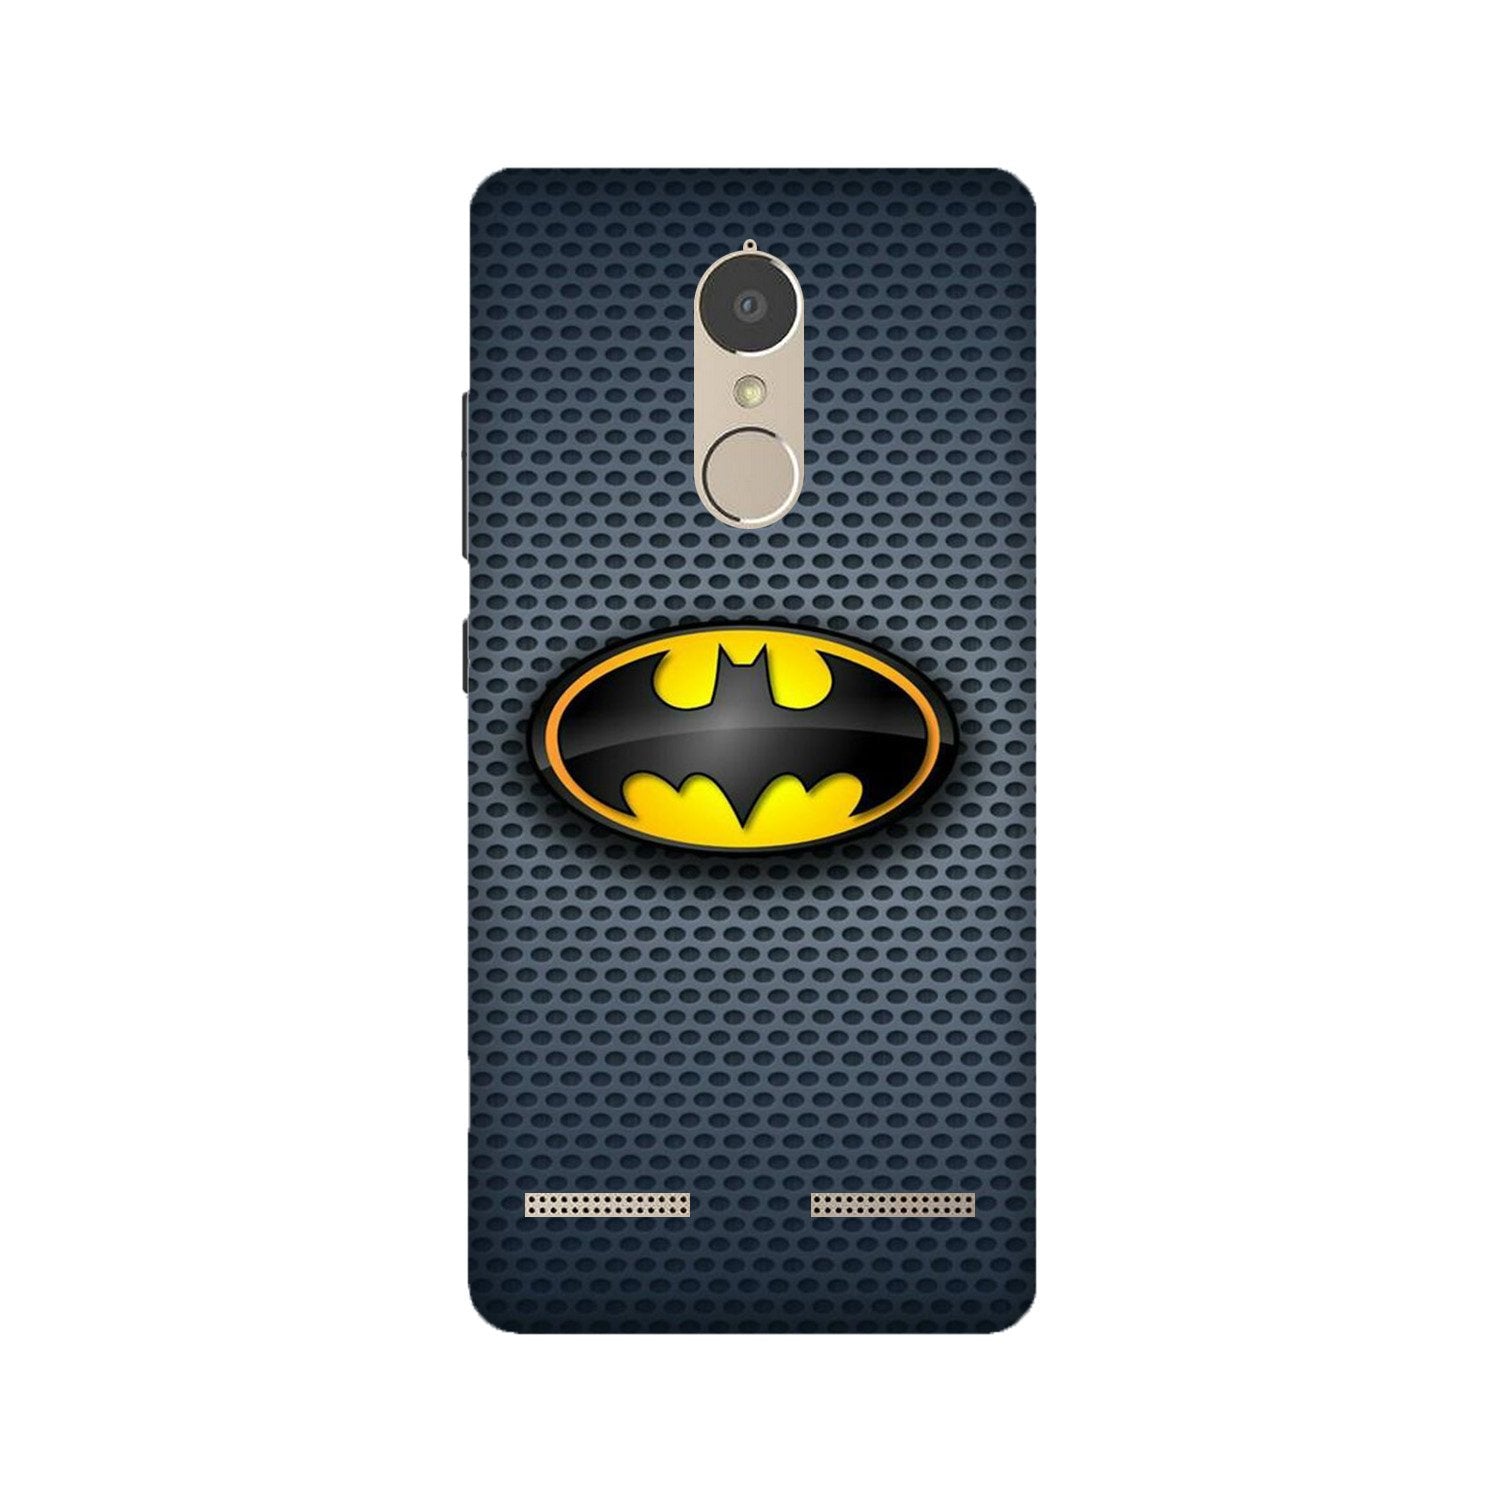 Batman Case for Lenovo K6 / K6 Power (Design No. 244)